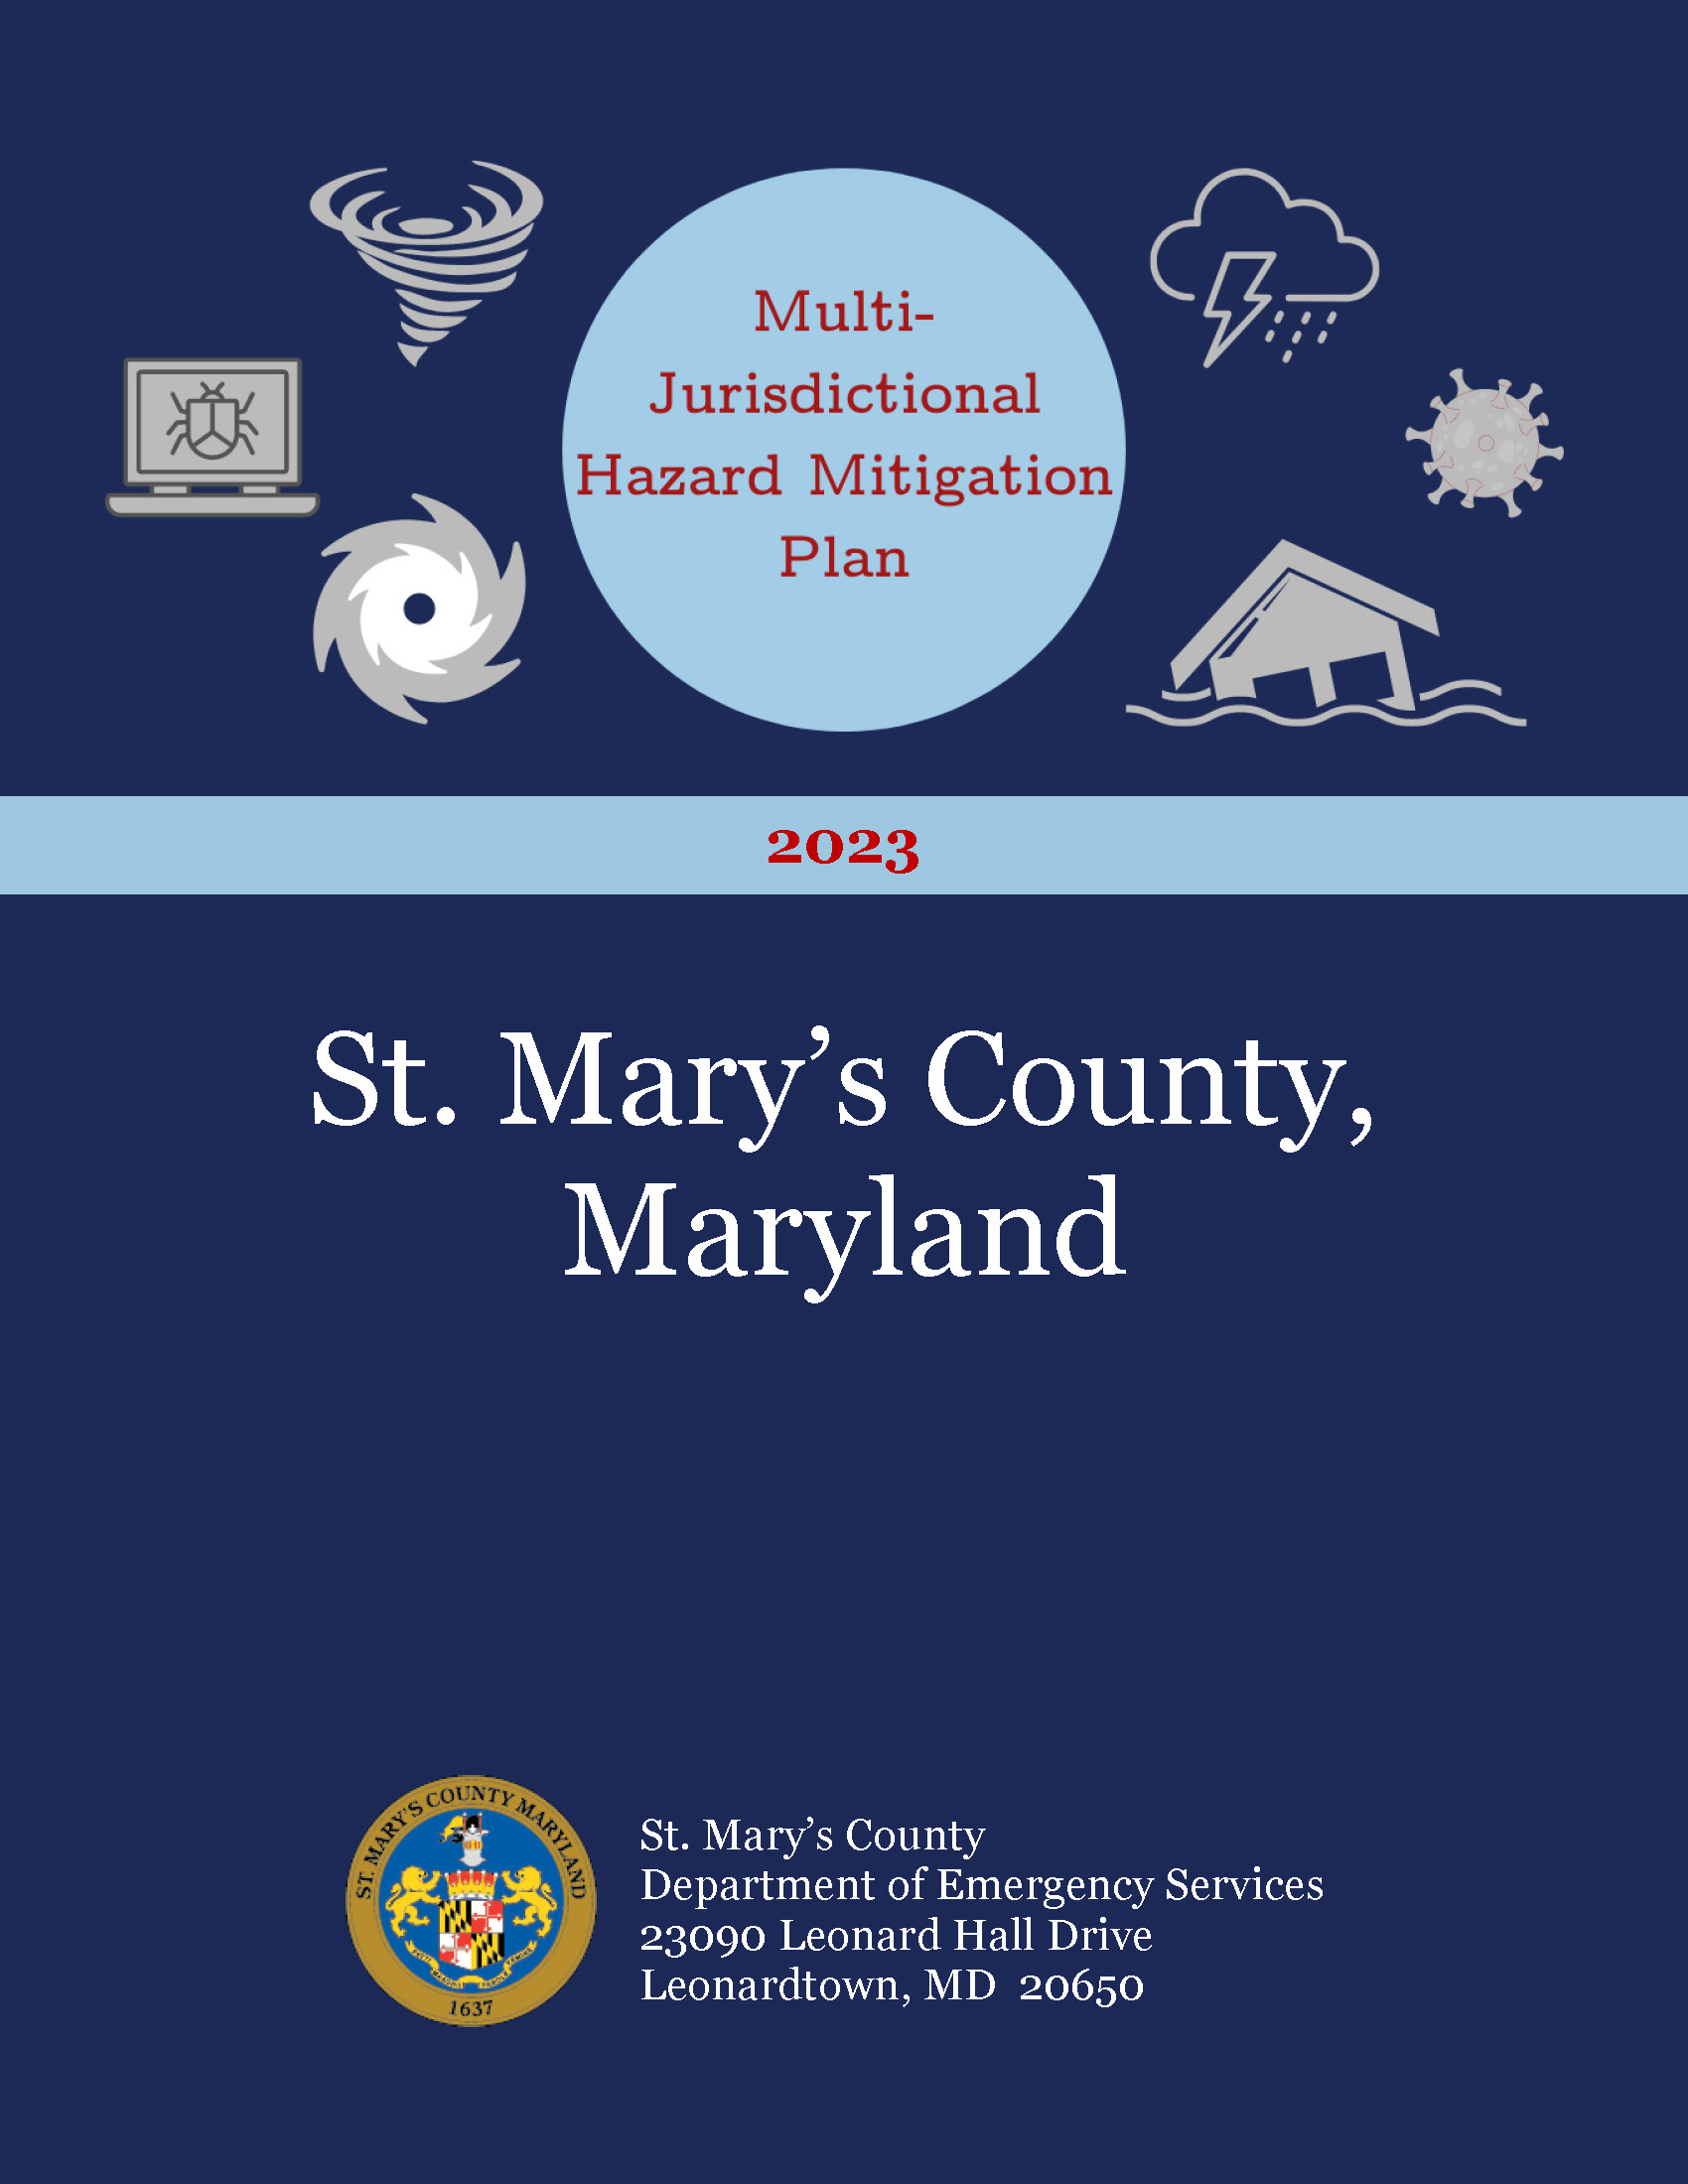 St. Mary's County, Maryland's Multi-Jurisdictional Hazard Mitigation Plan Cover